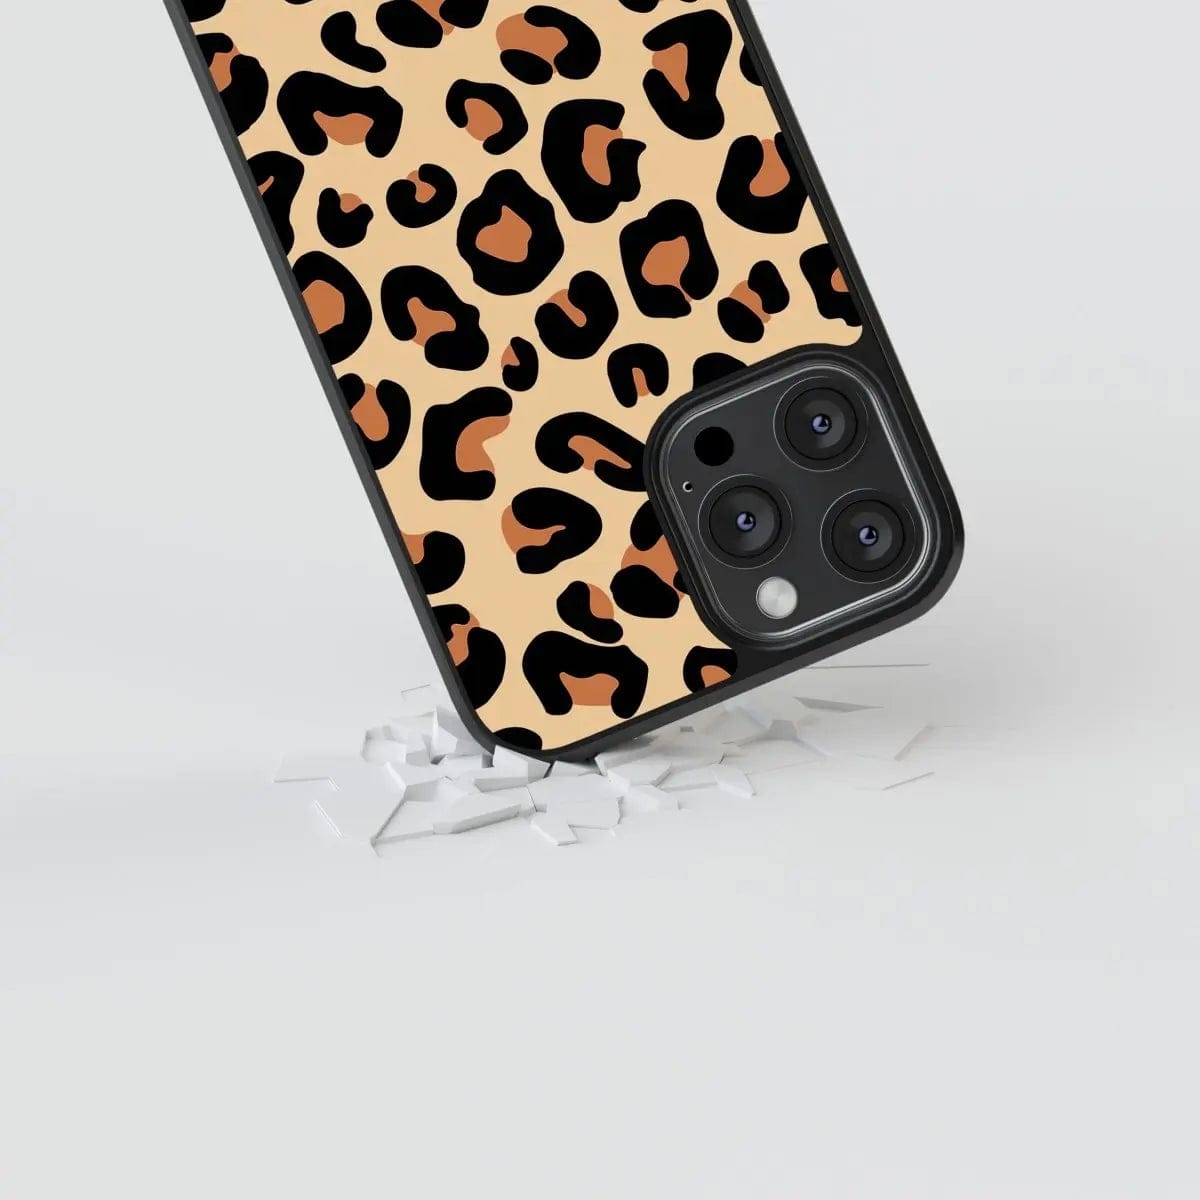 Phone case "Leo texture" - Artcase